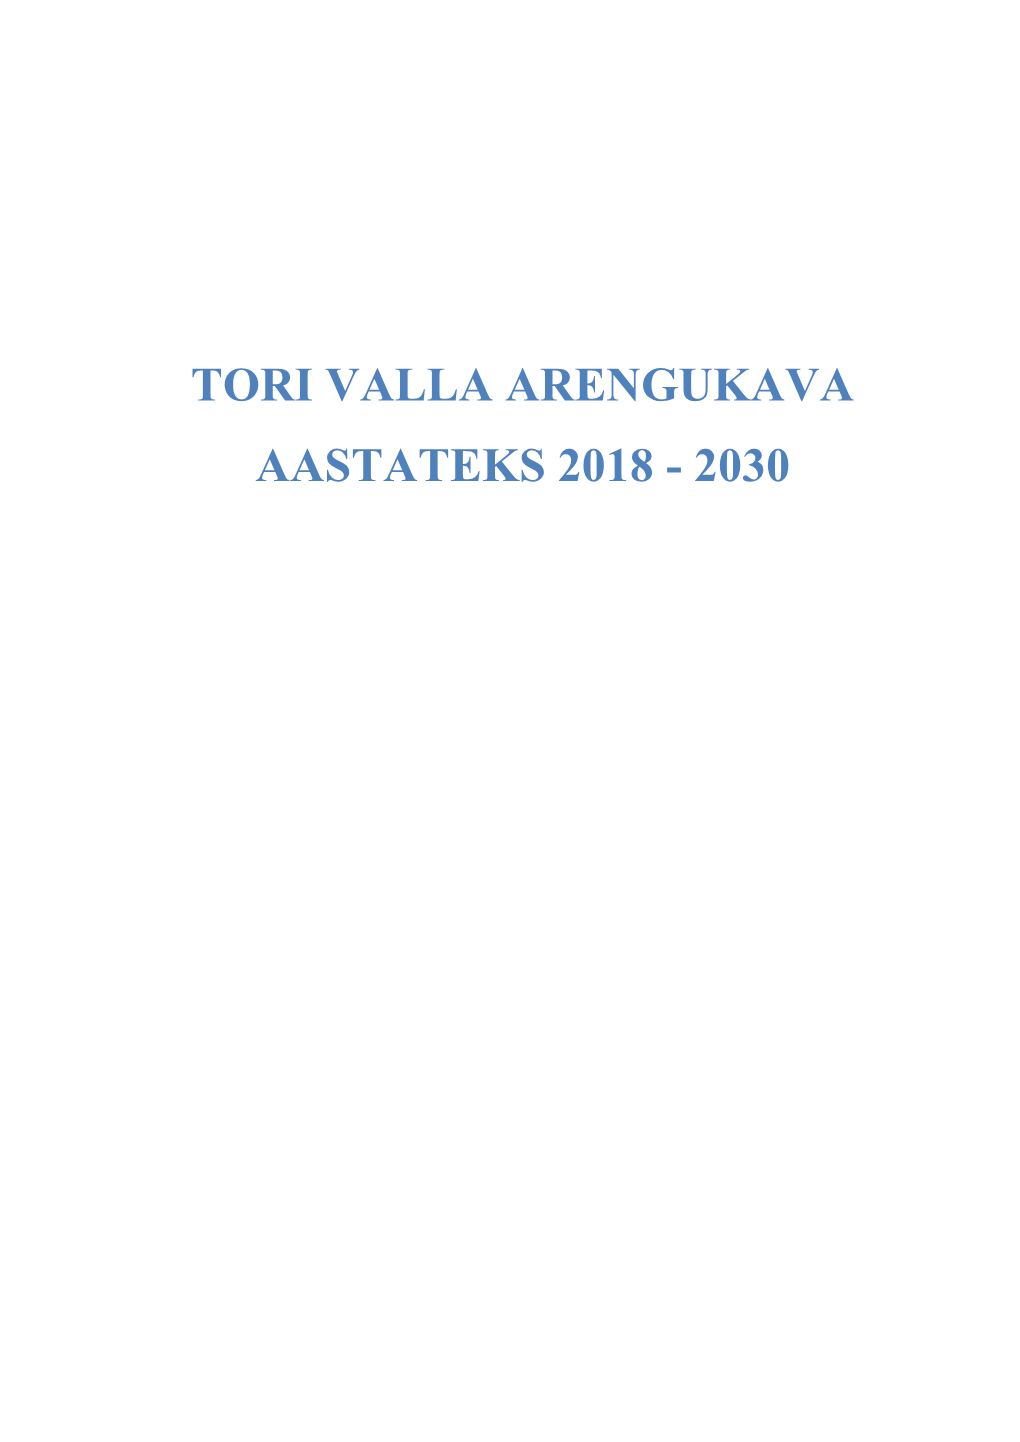 Tori Valla Arengukava Aastateks 2018 - 2030